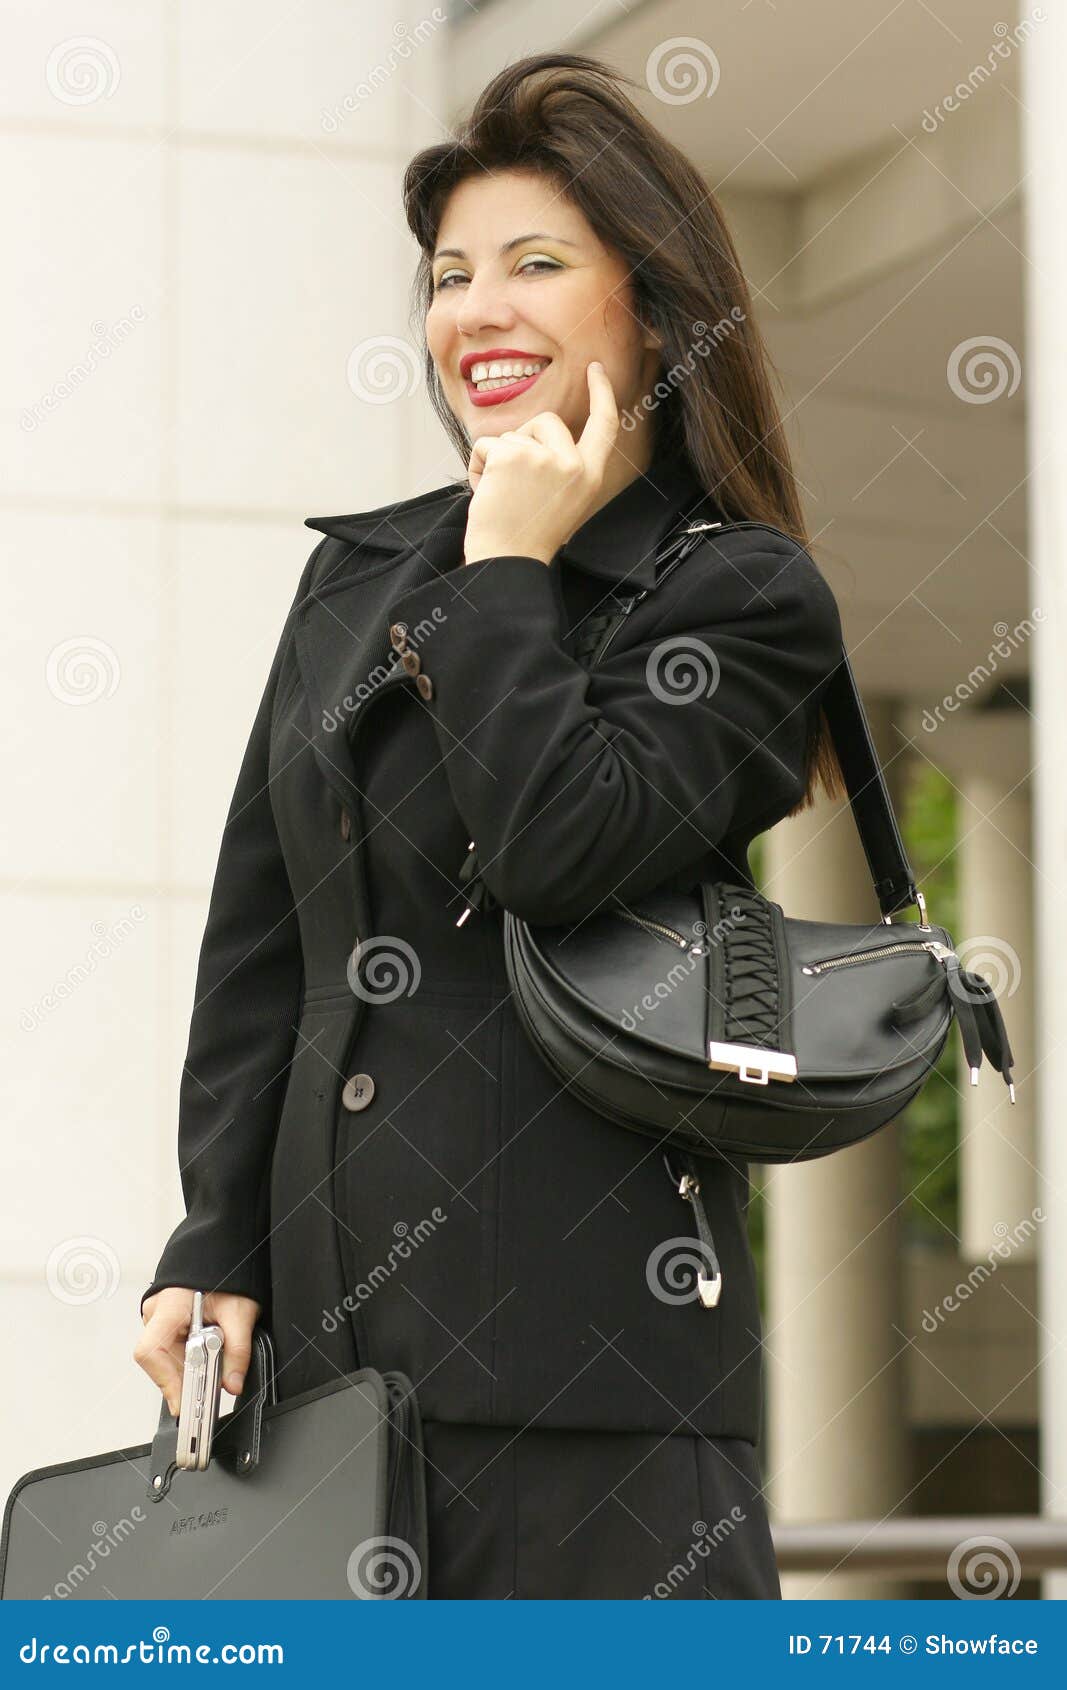 Saleswoman stock photo. Image of executive, professional - 71744